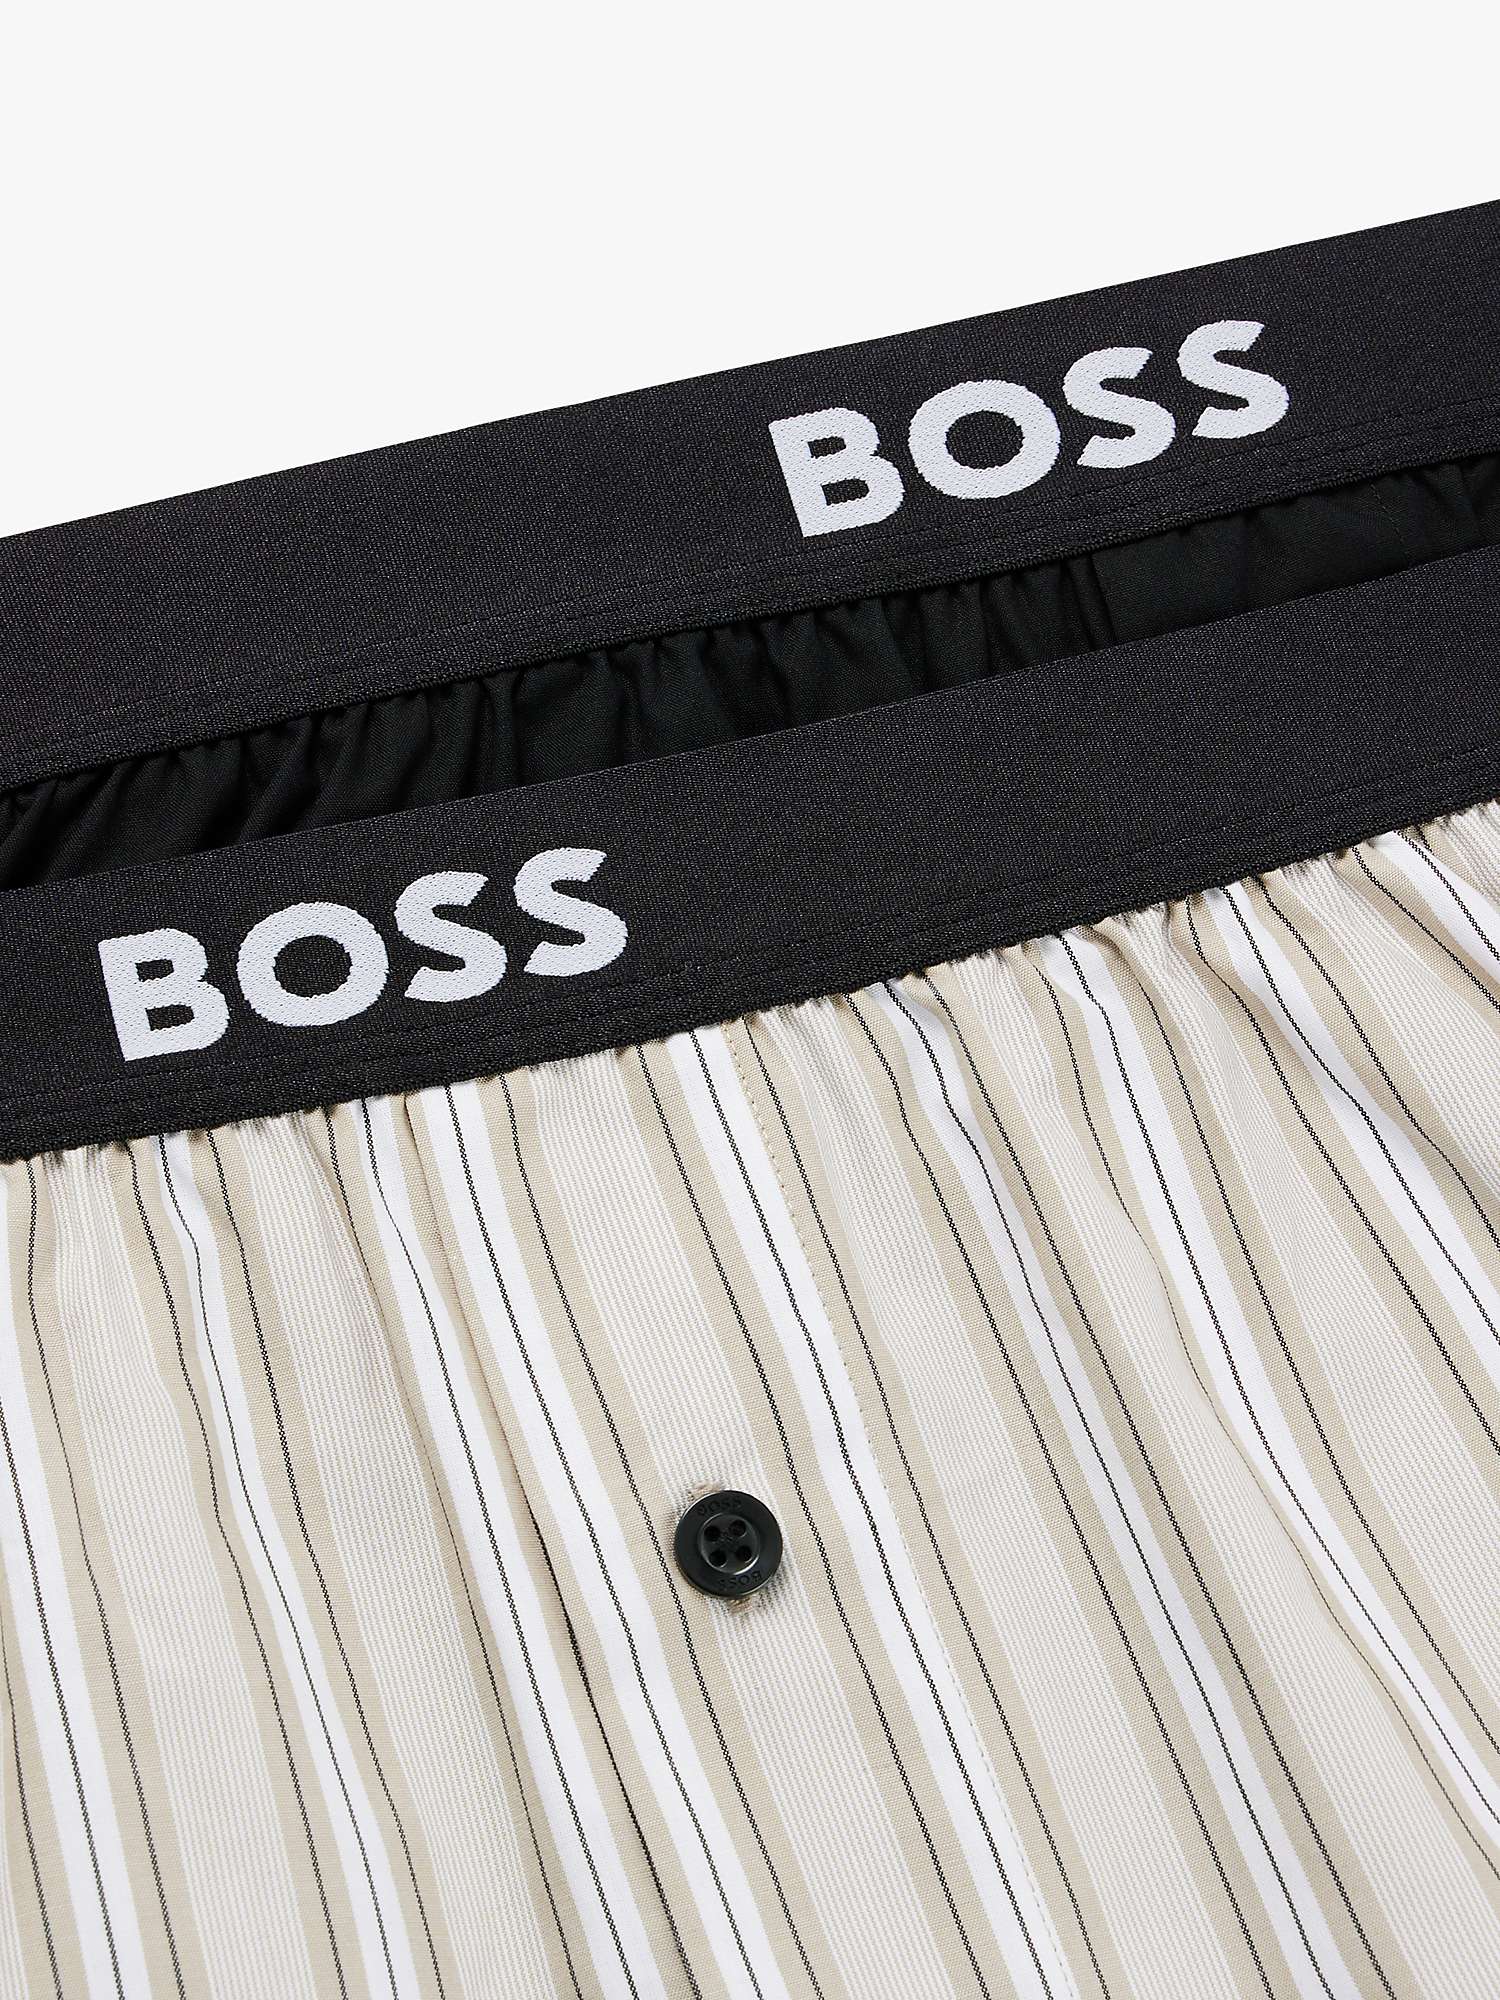 Buy BOSS Stripe and Plain Cotton Boxers, Pack of 2, Dark Beige/Black Online at johnlewis.com